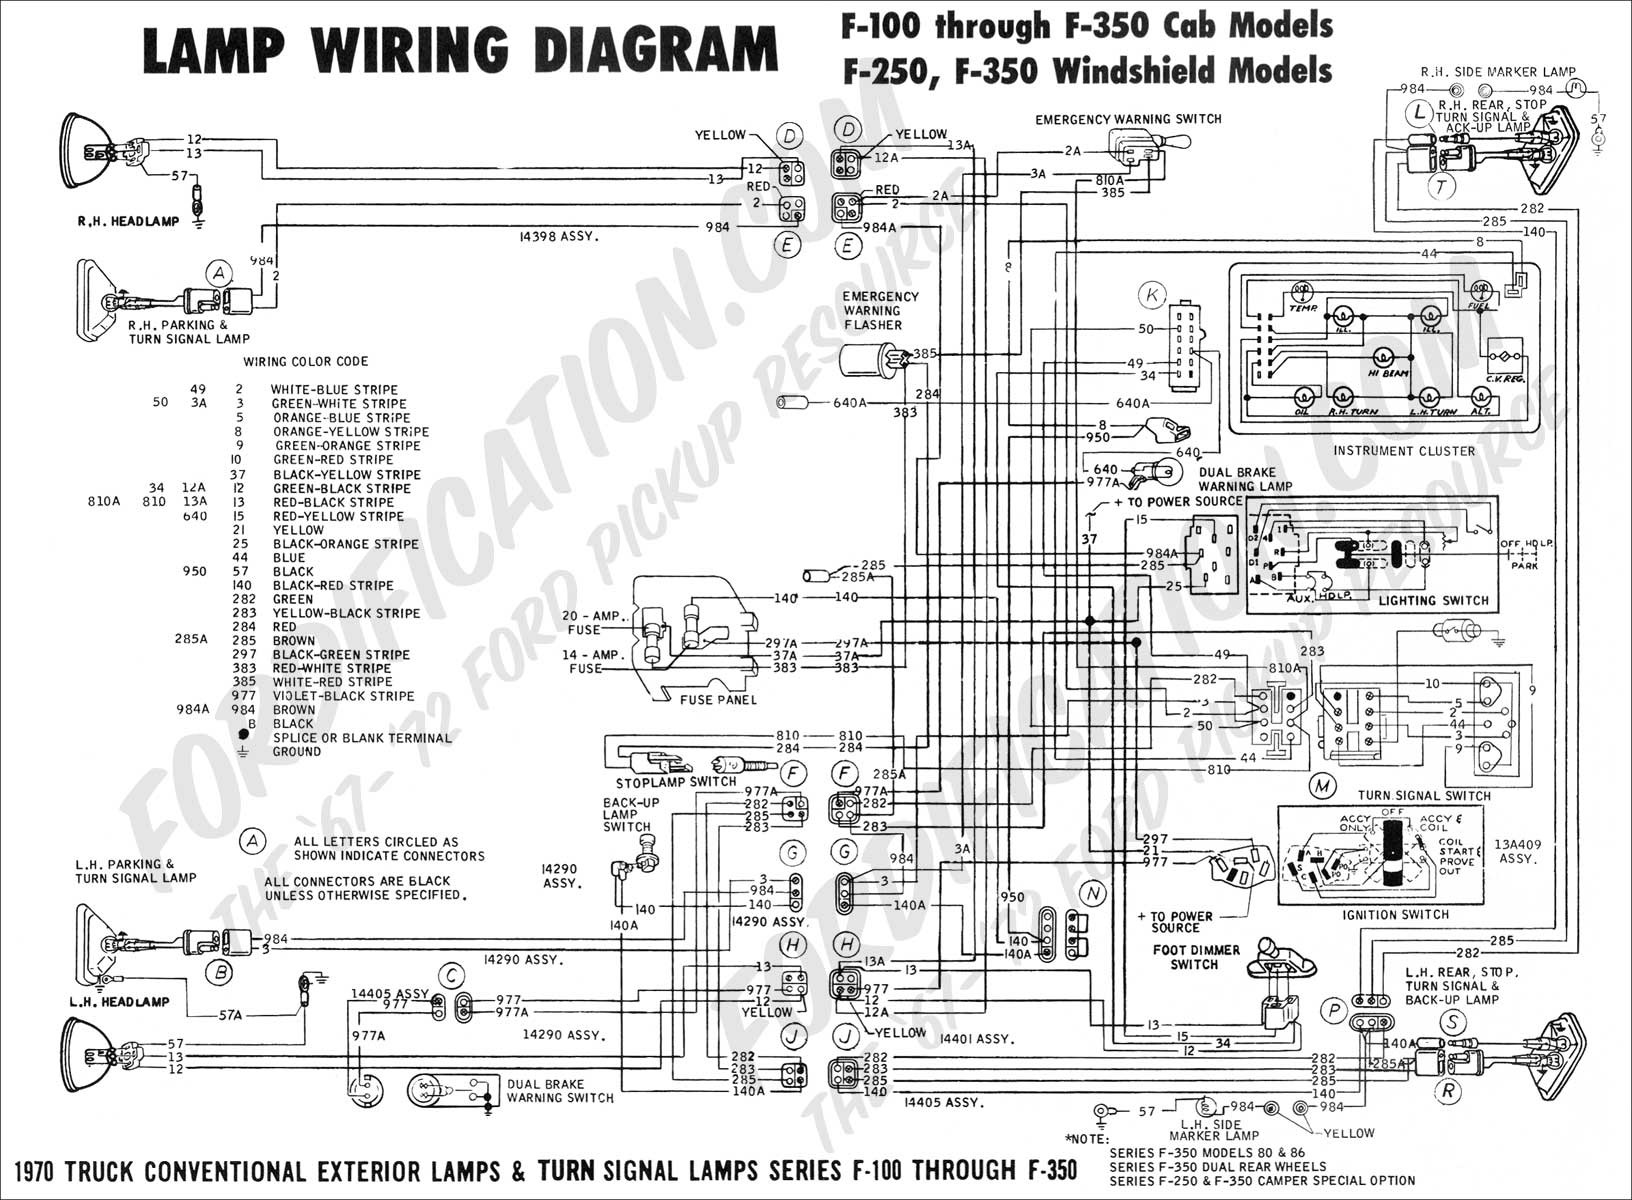 2001 F150 Wiring Diagram ford F700 Wiring Diagrams Additionally Dodge Under Hood Wiring Of 2001 F150 Wiring Diagram